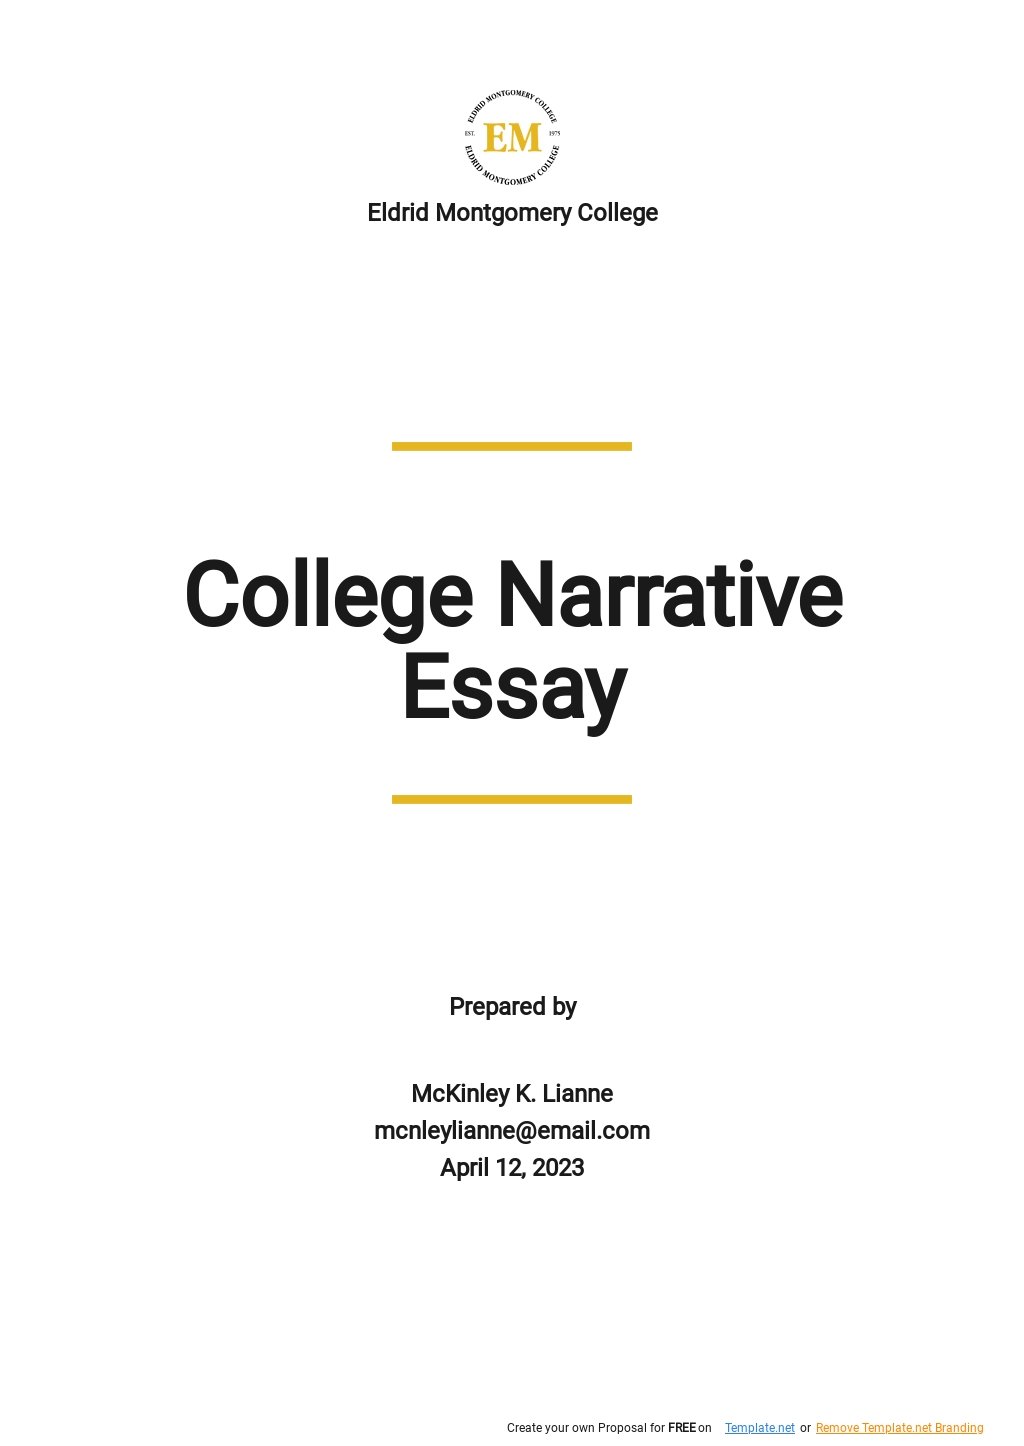 how long should a college narrative essay be